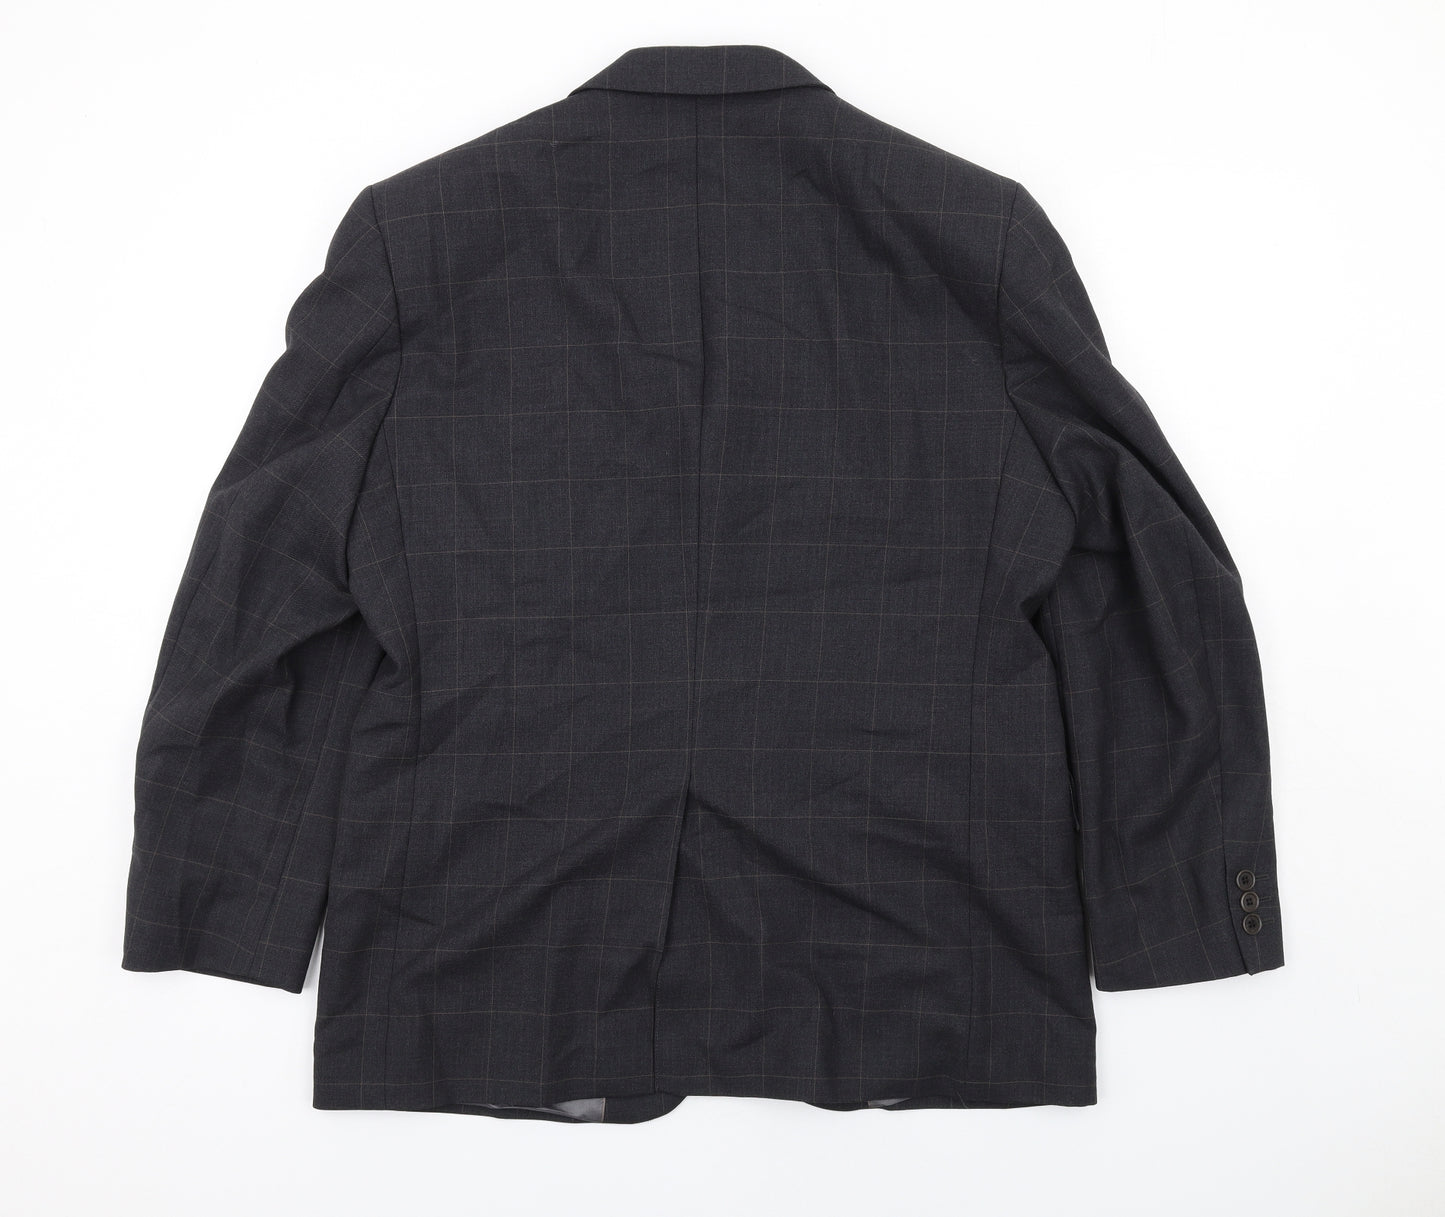 Marks and Spencer Mens Grey Check Wool Jacket Suit Jacket Size 40 Regular